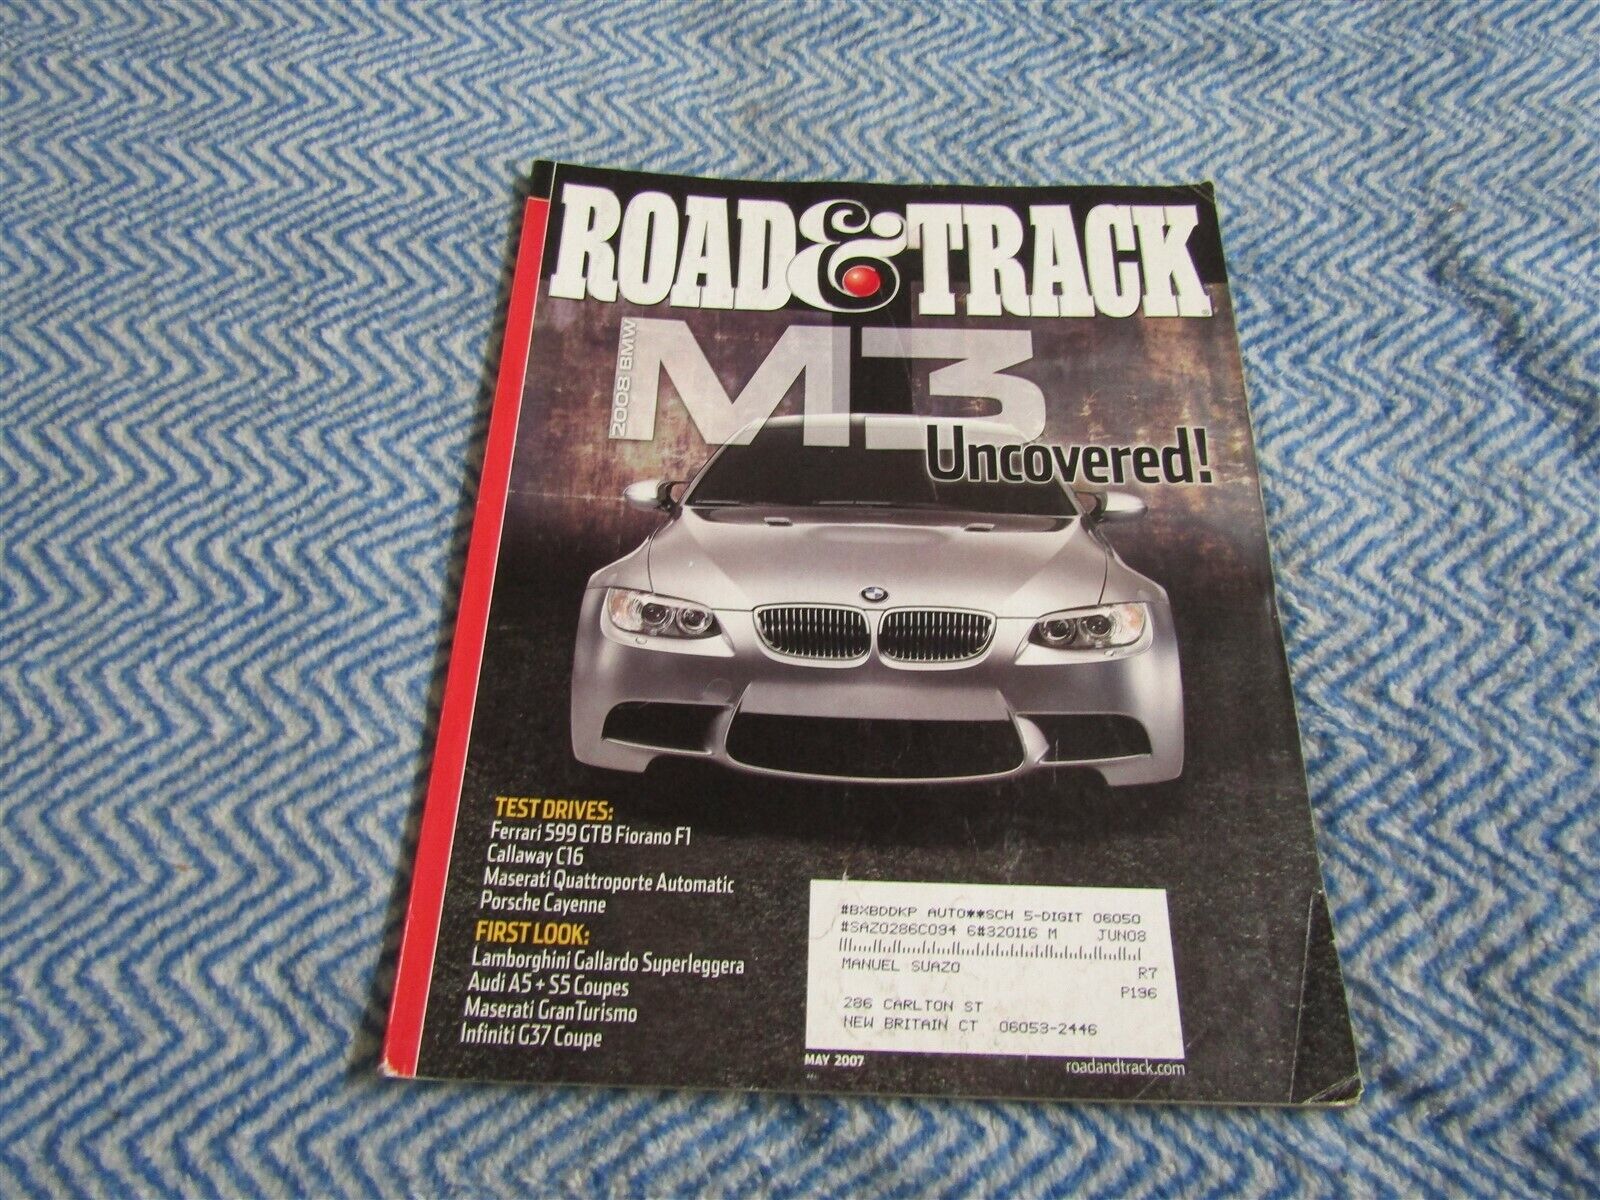 ROAD & TRACK MAGAZINE MAY 2007 M3 UNCOVERED FERRARI 599 GTB FIORANO CALLAWAY C16